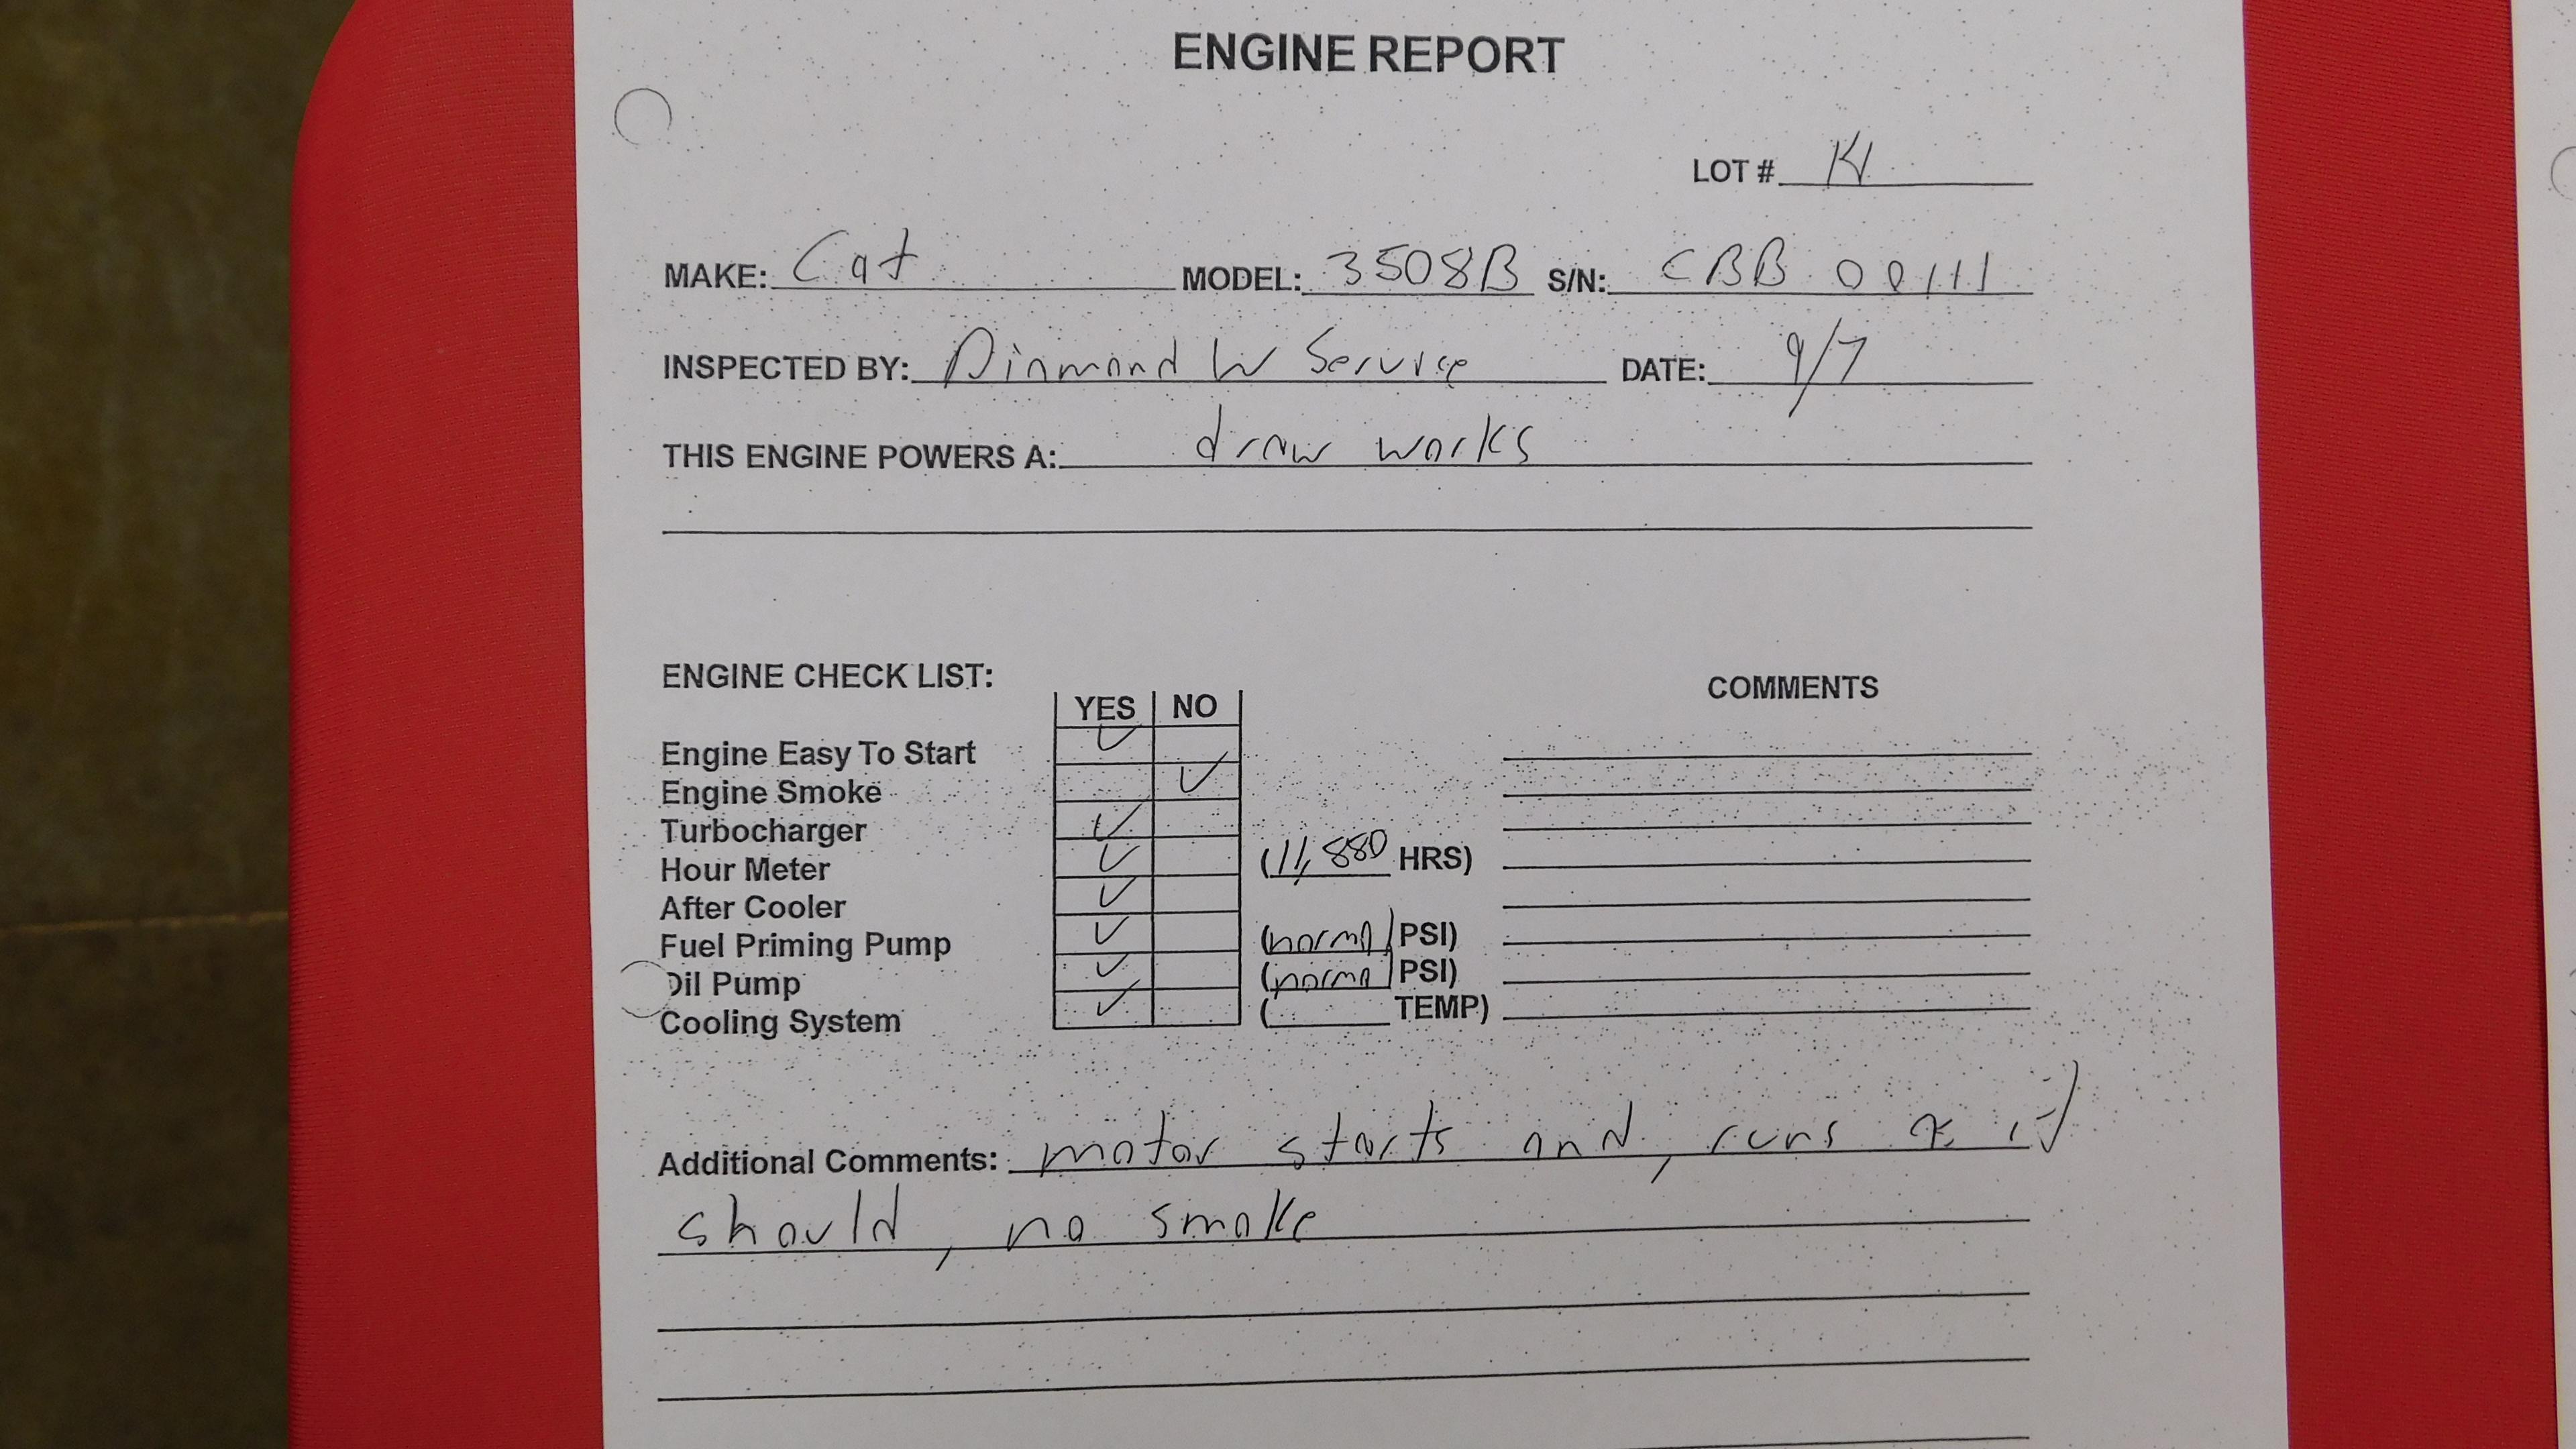 (2112430) CAT 3508 DIESEL SN- SEE ENGINE REPORT, W/ NATIONAL C-300 TORQUE C